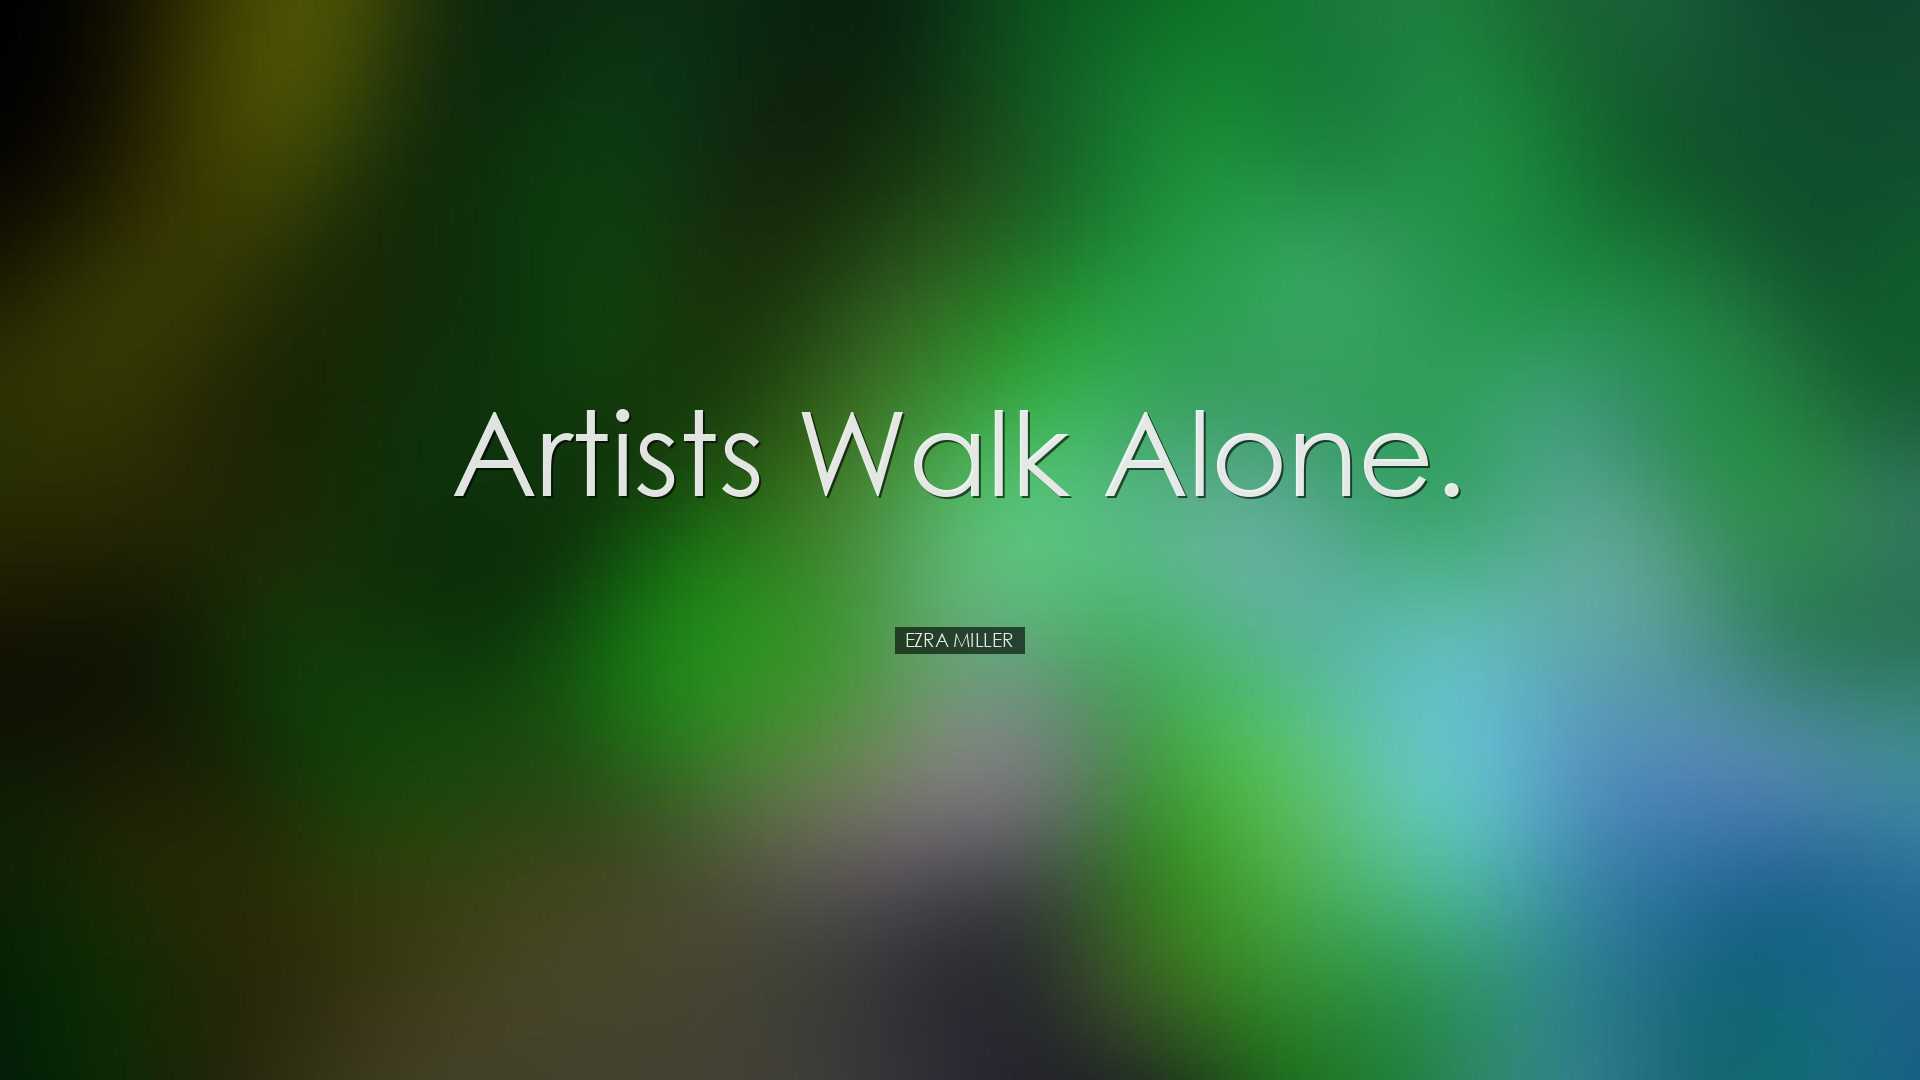 Artists walk alone. - Ezra Miller